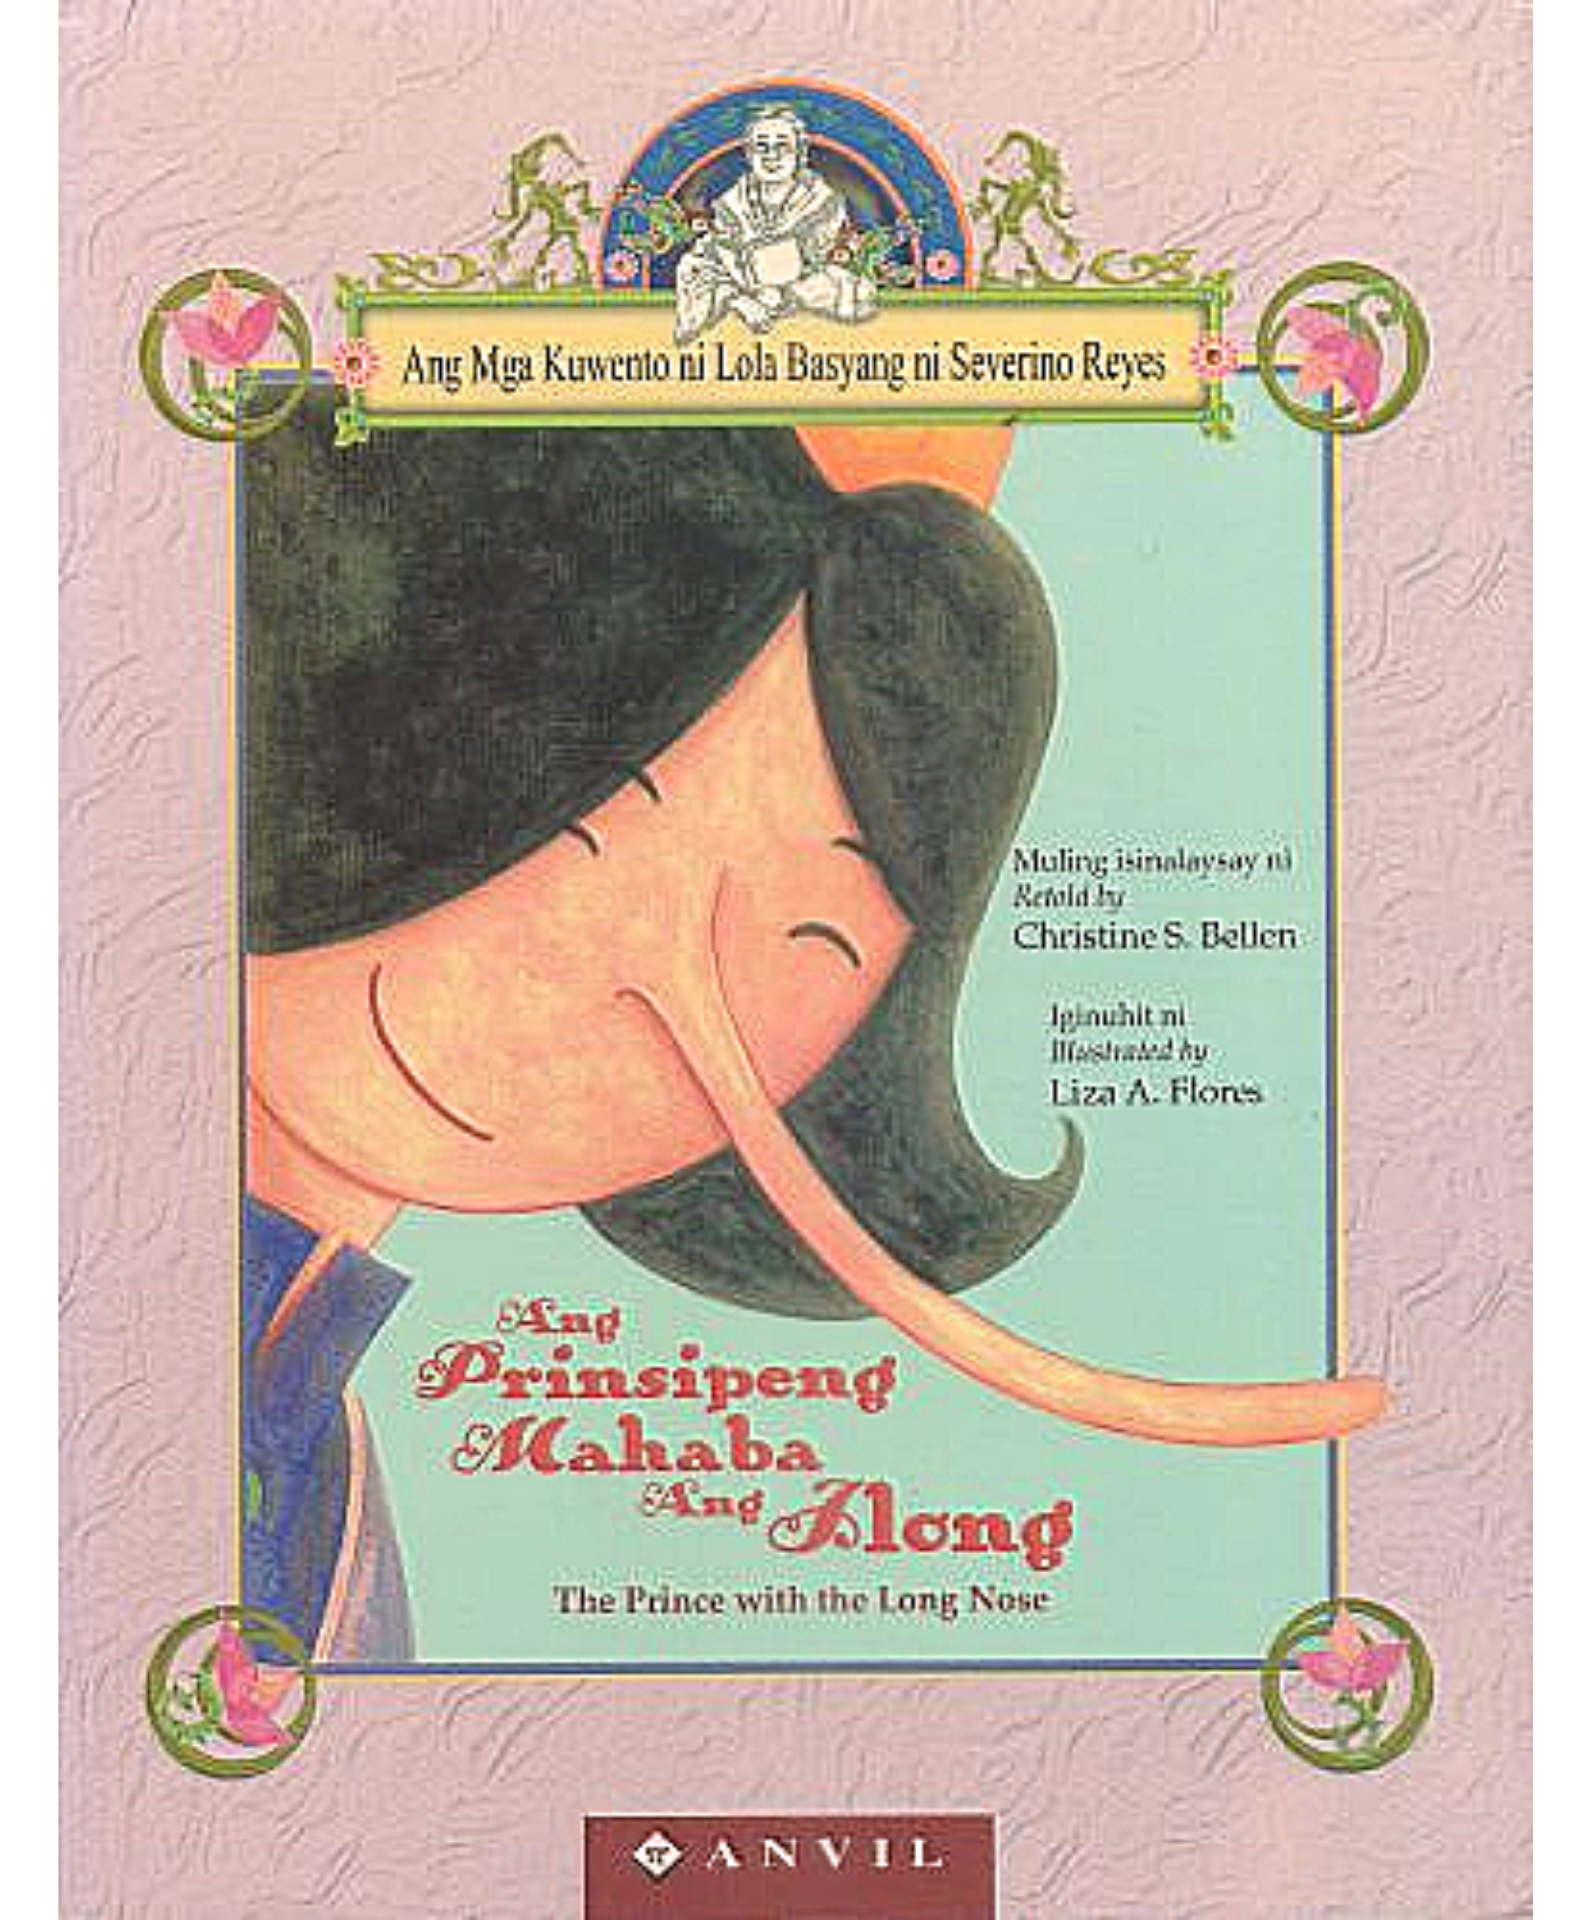 Lola Basyang: Ang Prinsipeng Mahaba ang Ilong (The Prince with the Long Nose) - Philippine Expressions Bookshop